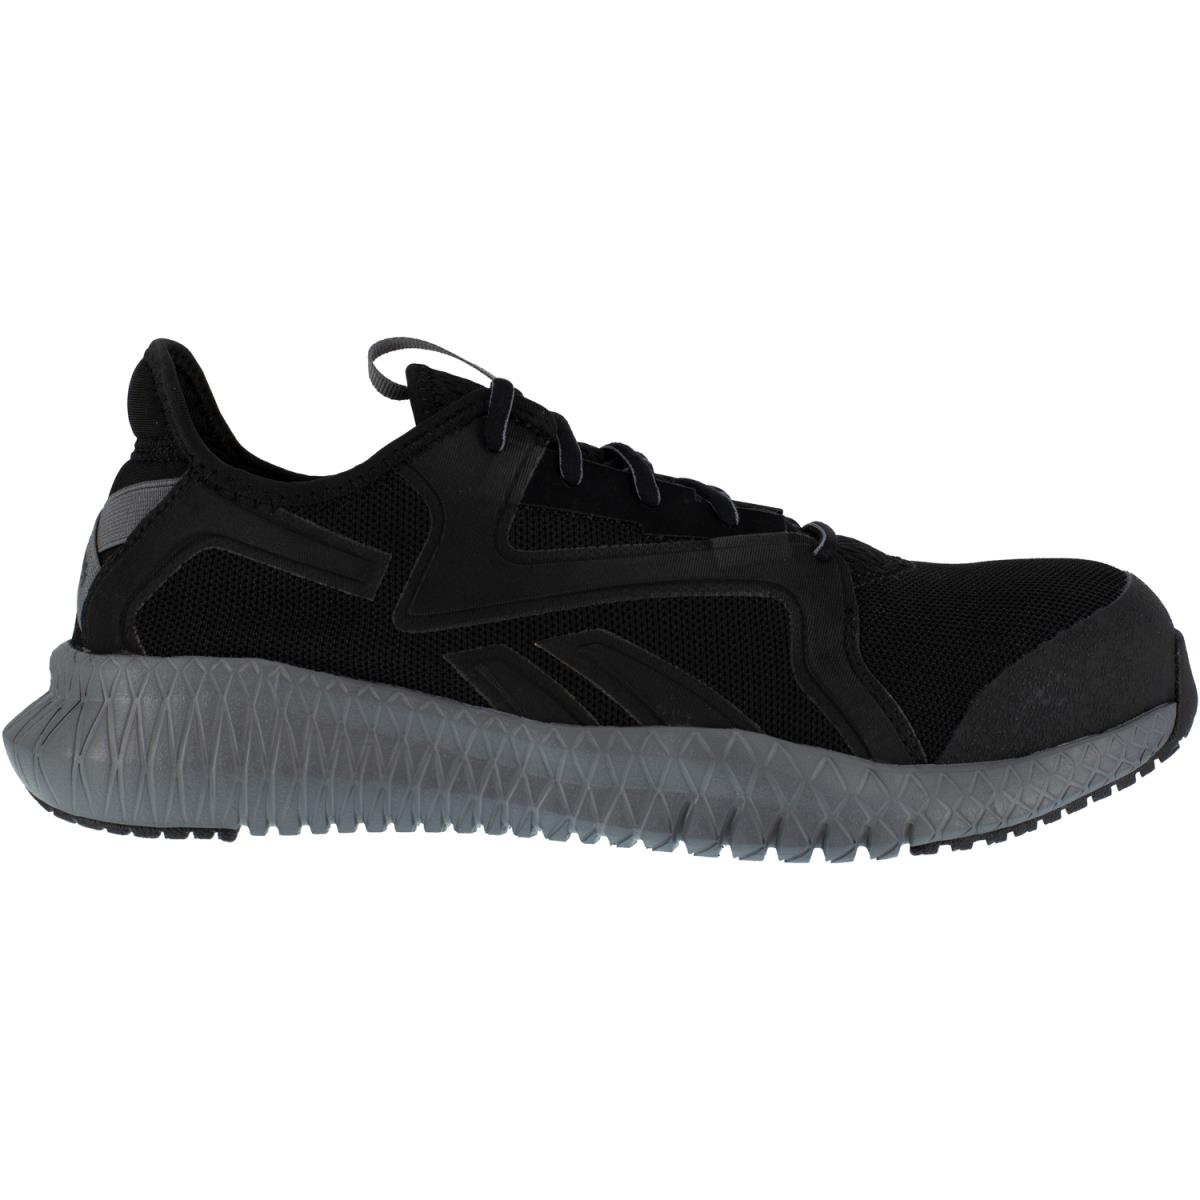 Reebok Mens Black/grey Nylon Work Shoes Flexagon 3.0 CT M